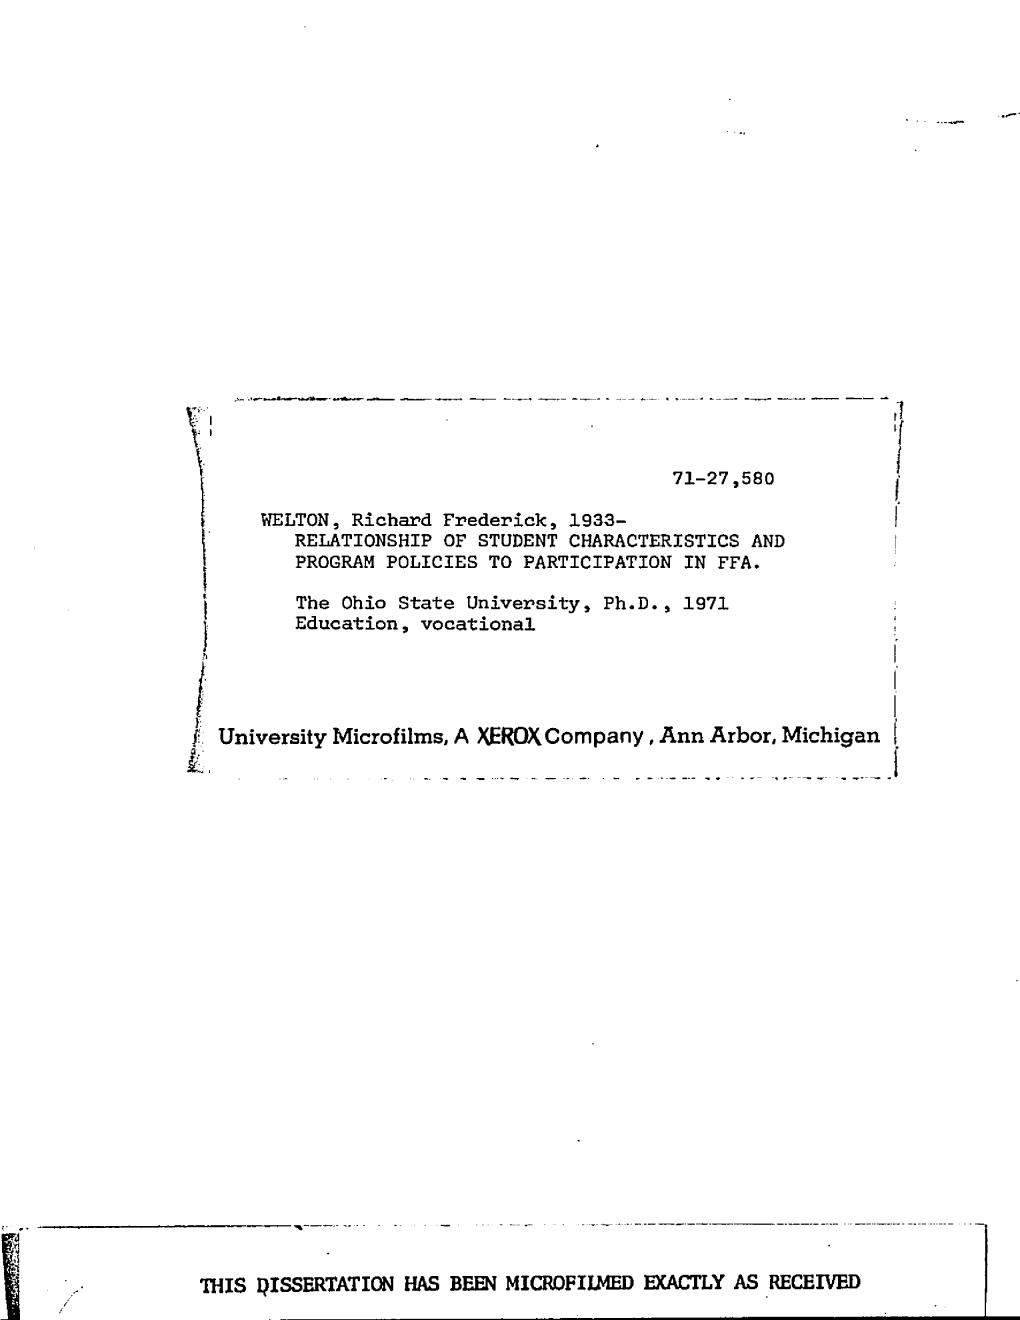 ) University Microfilms, a XEROX Company, Ann Arbor, Michigan [